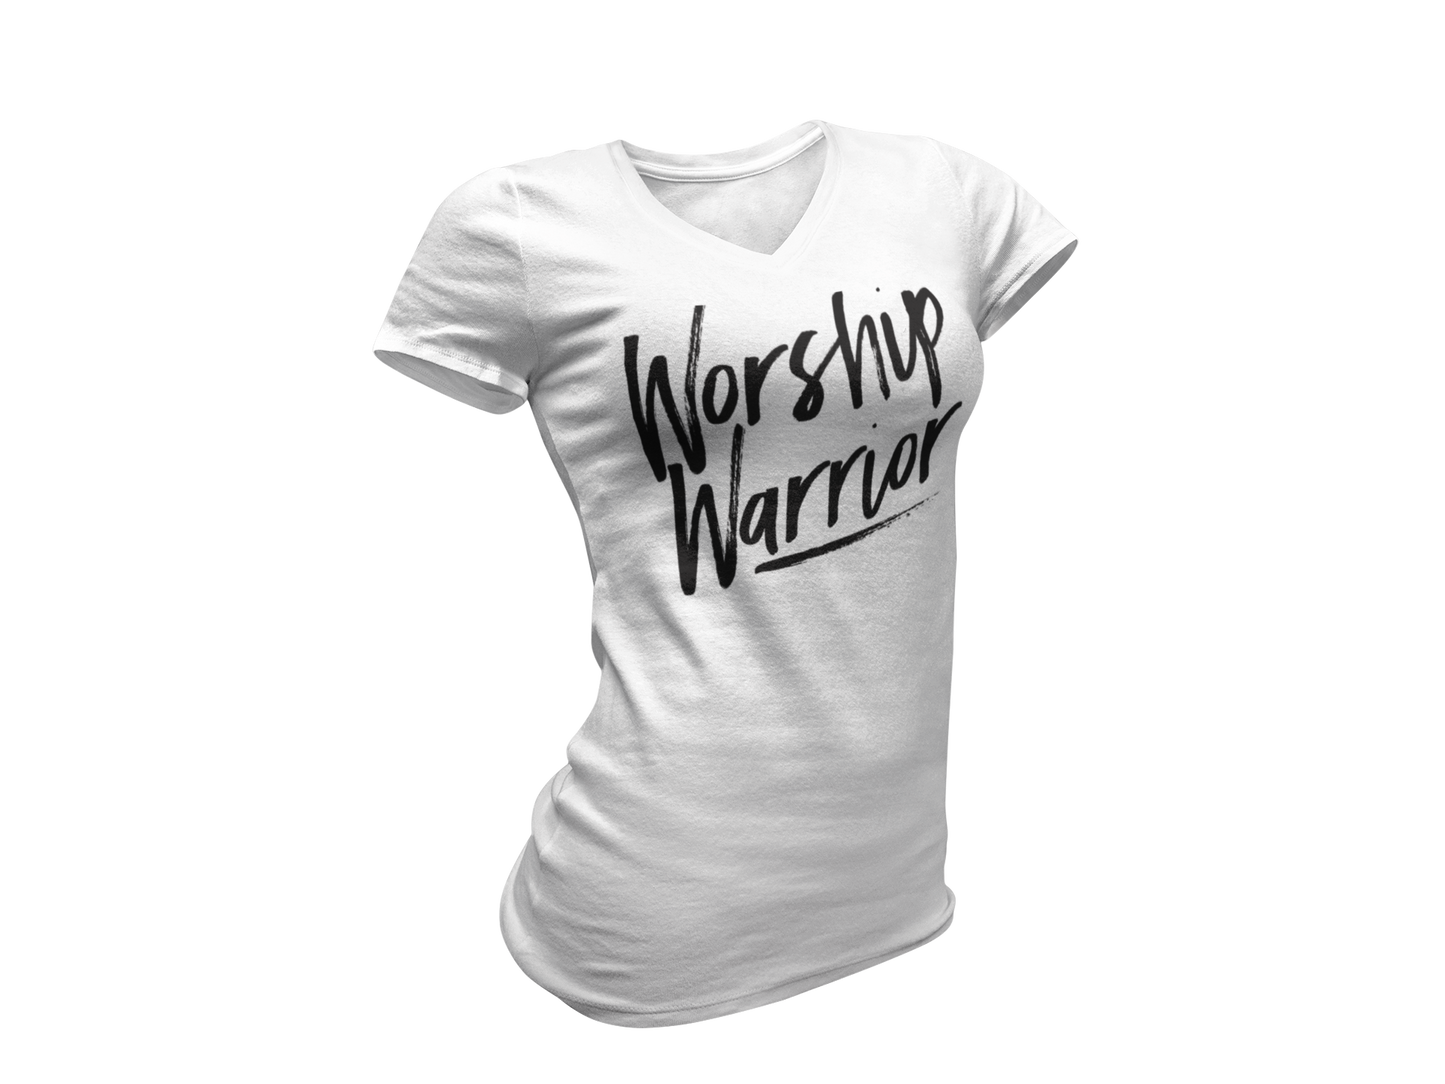 Worship Warrior Women's V-Neck T-Shirt